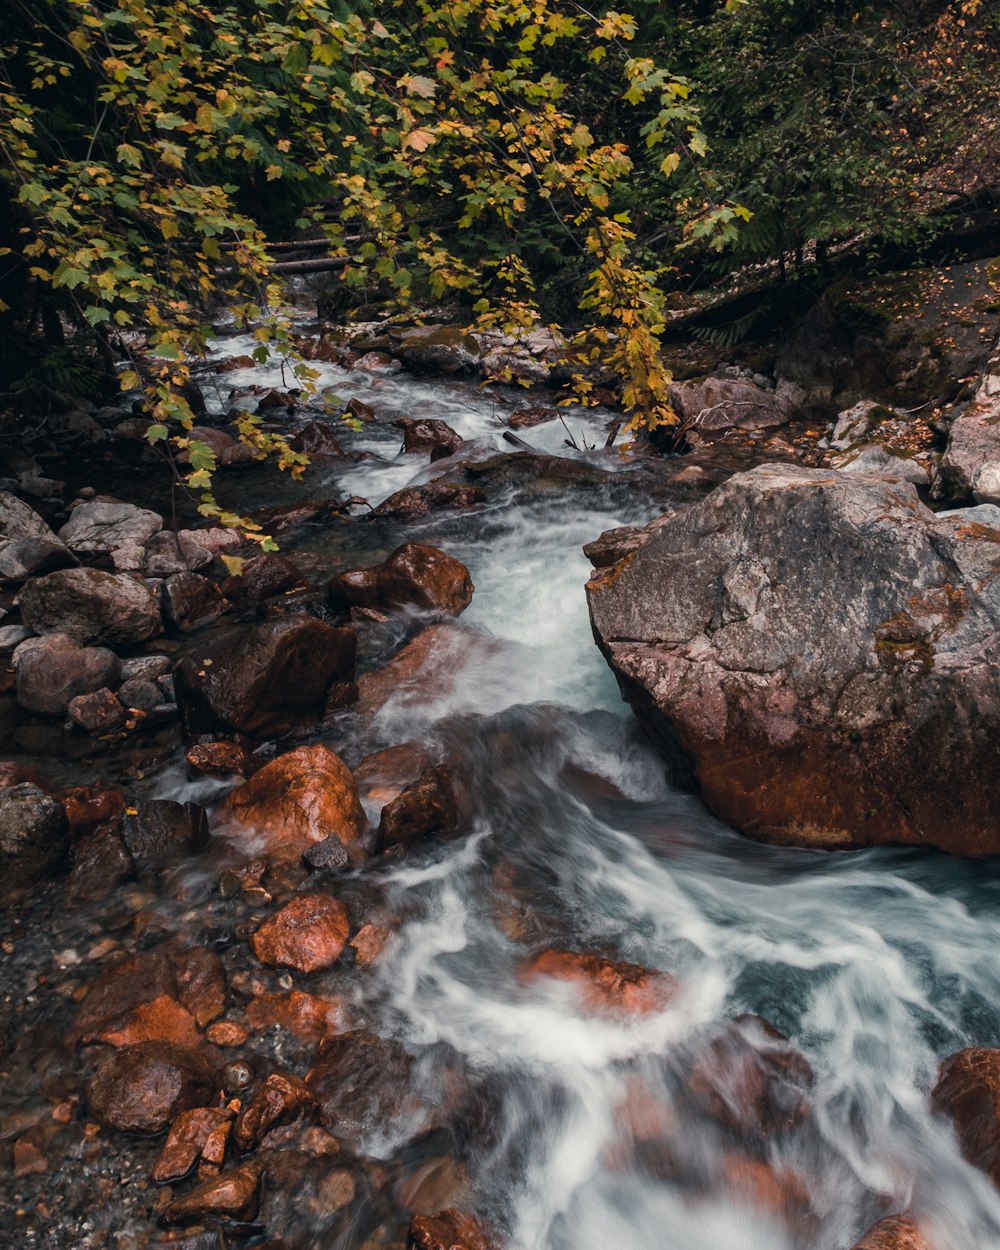 rocks on water stream